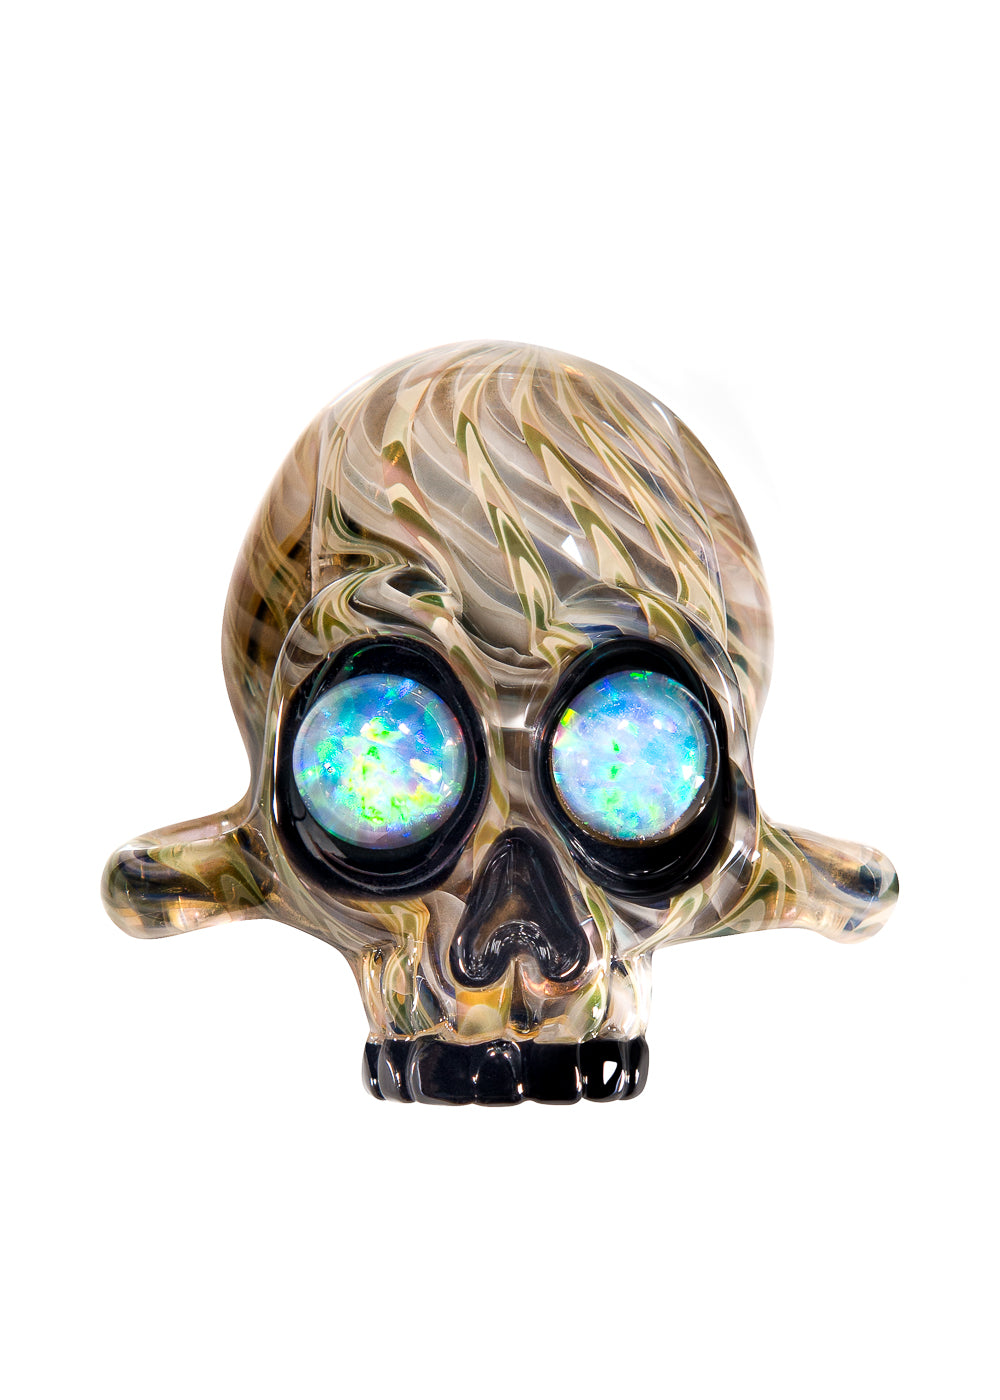 Raked Collaboration Skull Pendant by AKM and JD Mapelsden